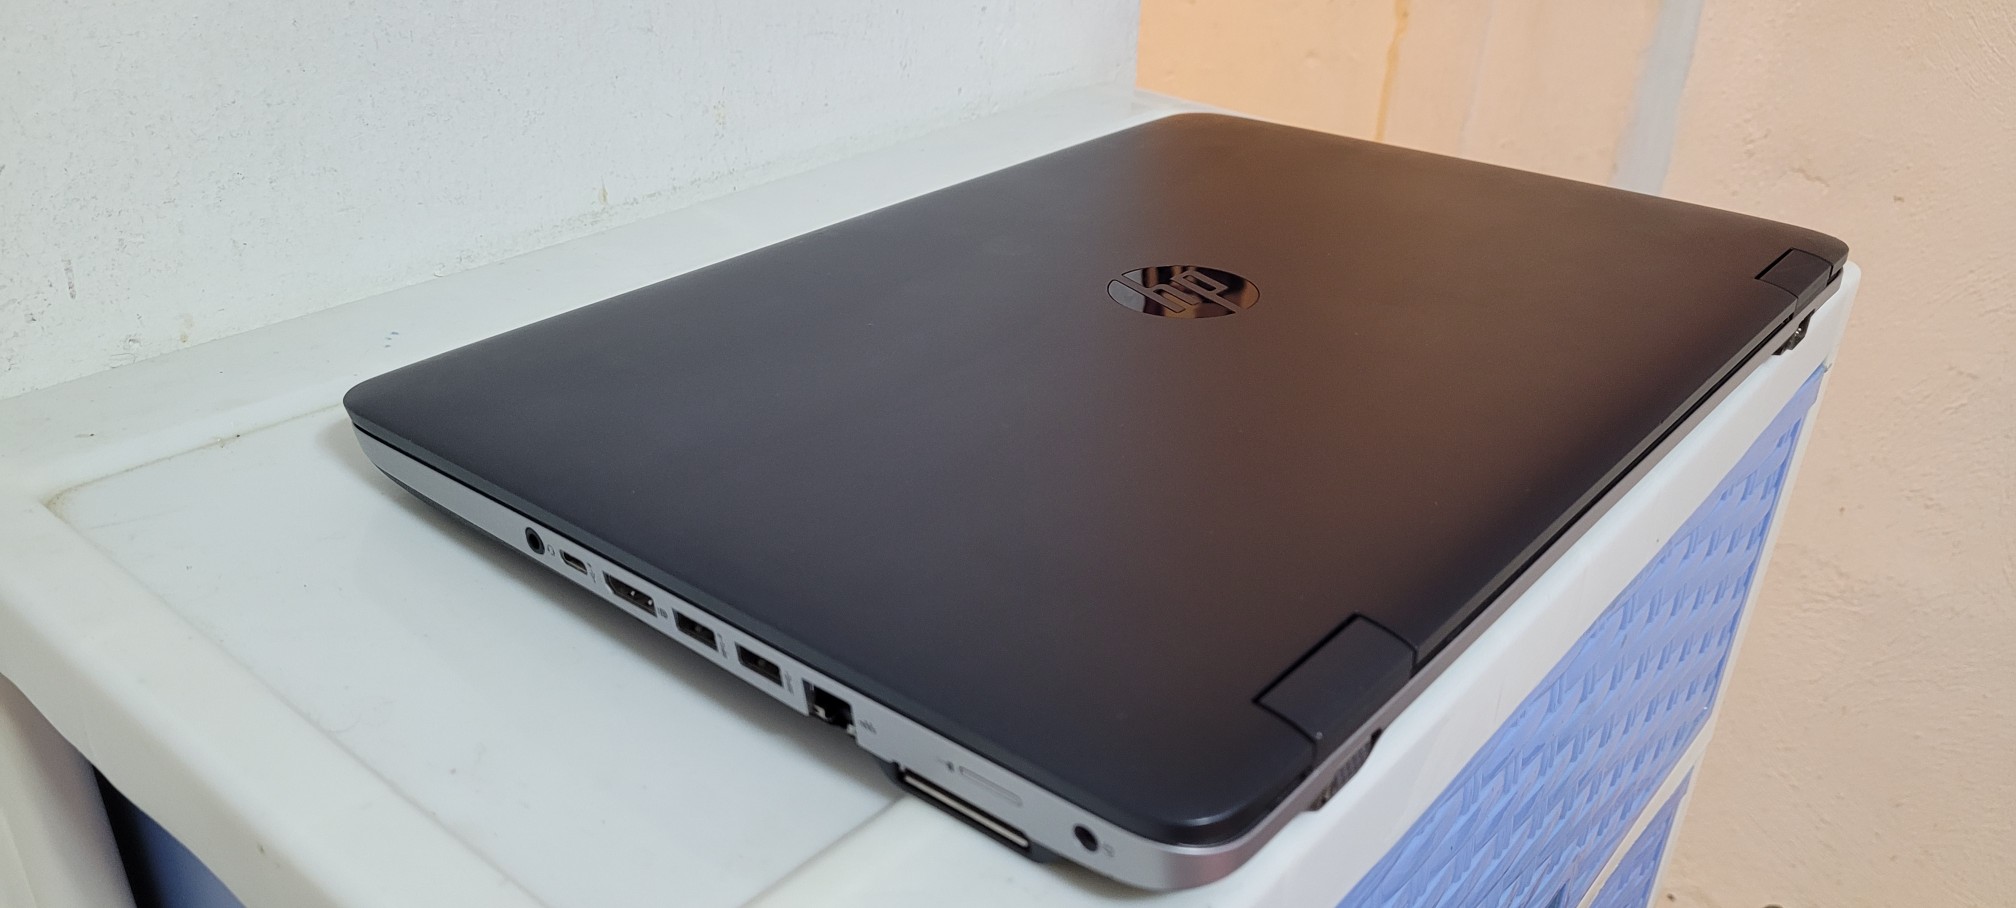 computadoras y laptops - Laptop hp G2 Core i5 6ta Gen Ram 8gb ddr4 Disco SSD 256GB Teclado numerico 2